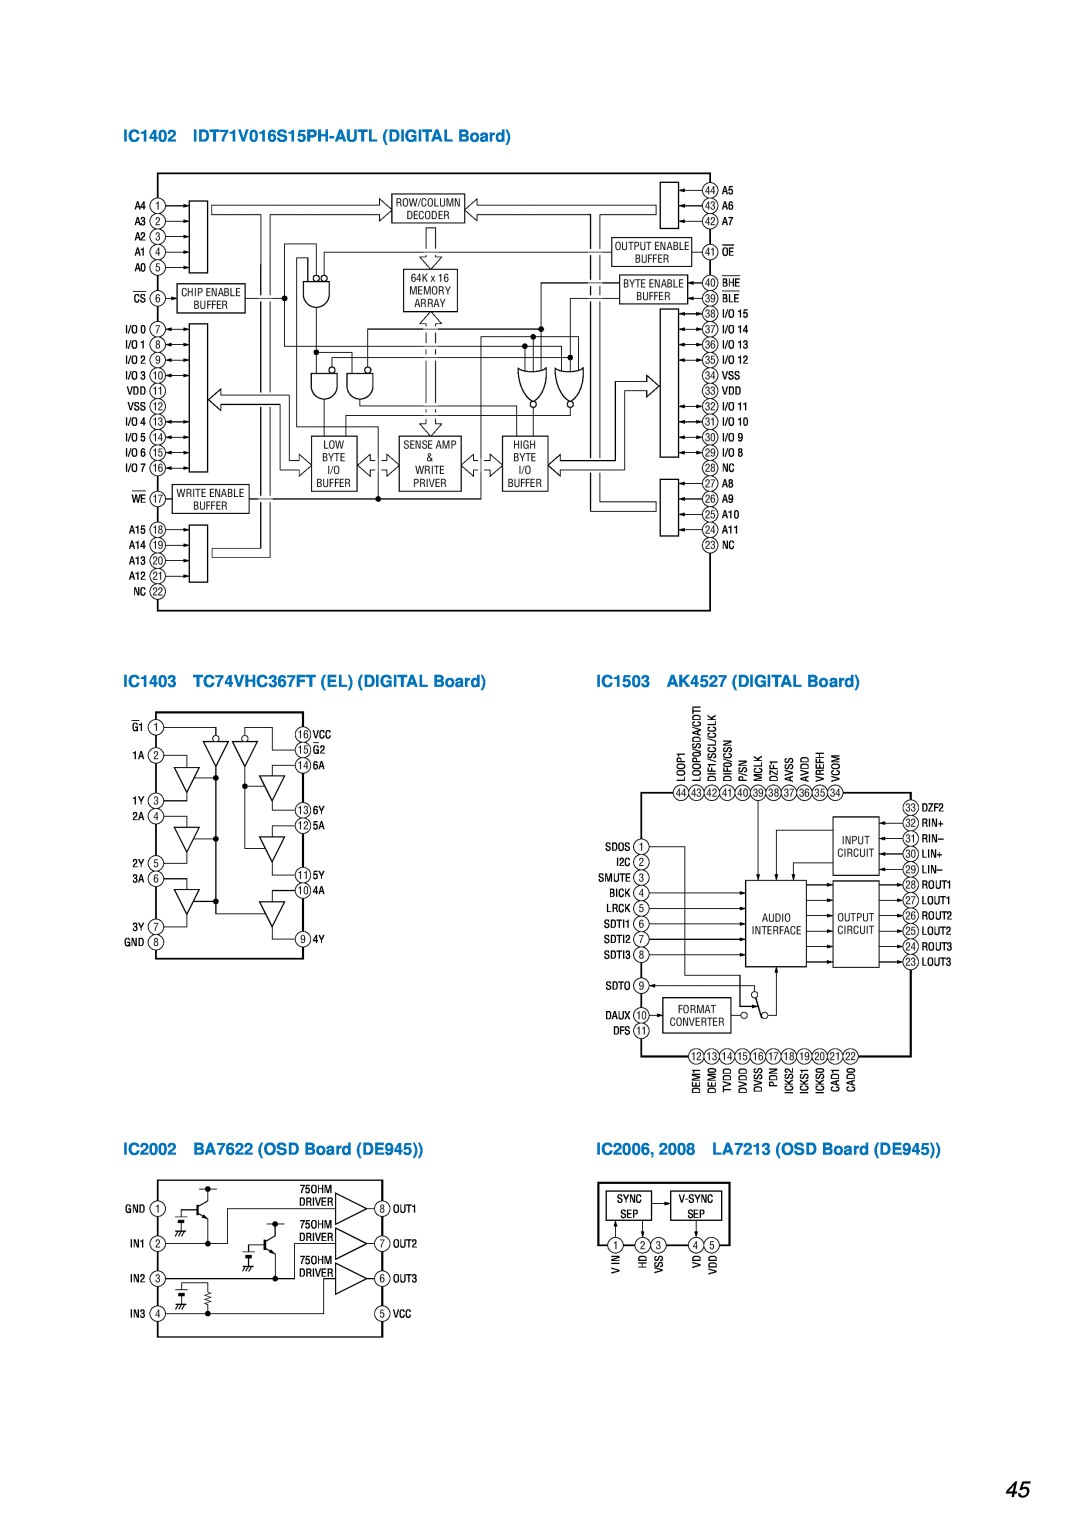 Sony STR-DE845 IC1402 IDT71V016S15PH-AUTLDIGITAL Board, IC1403 TC74VHC367FT EL DIGITAL Board, IC1503 AK4527 DIGITAL Board 